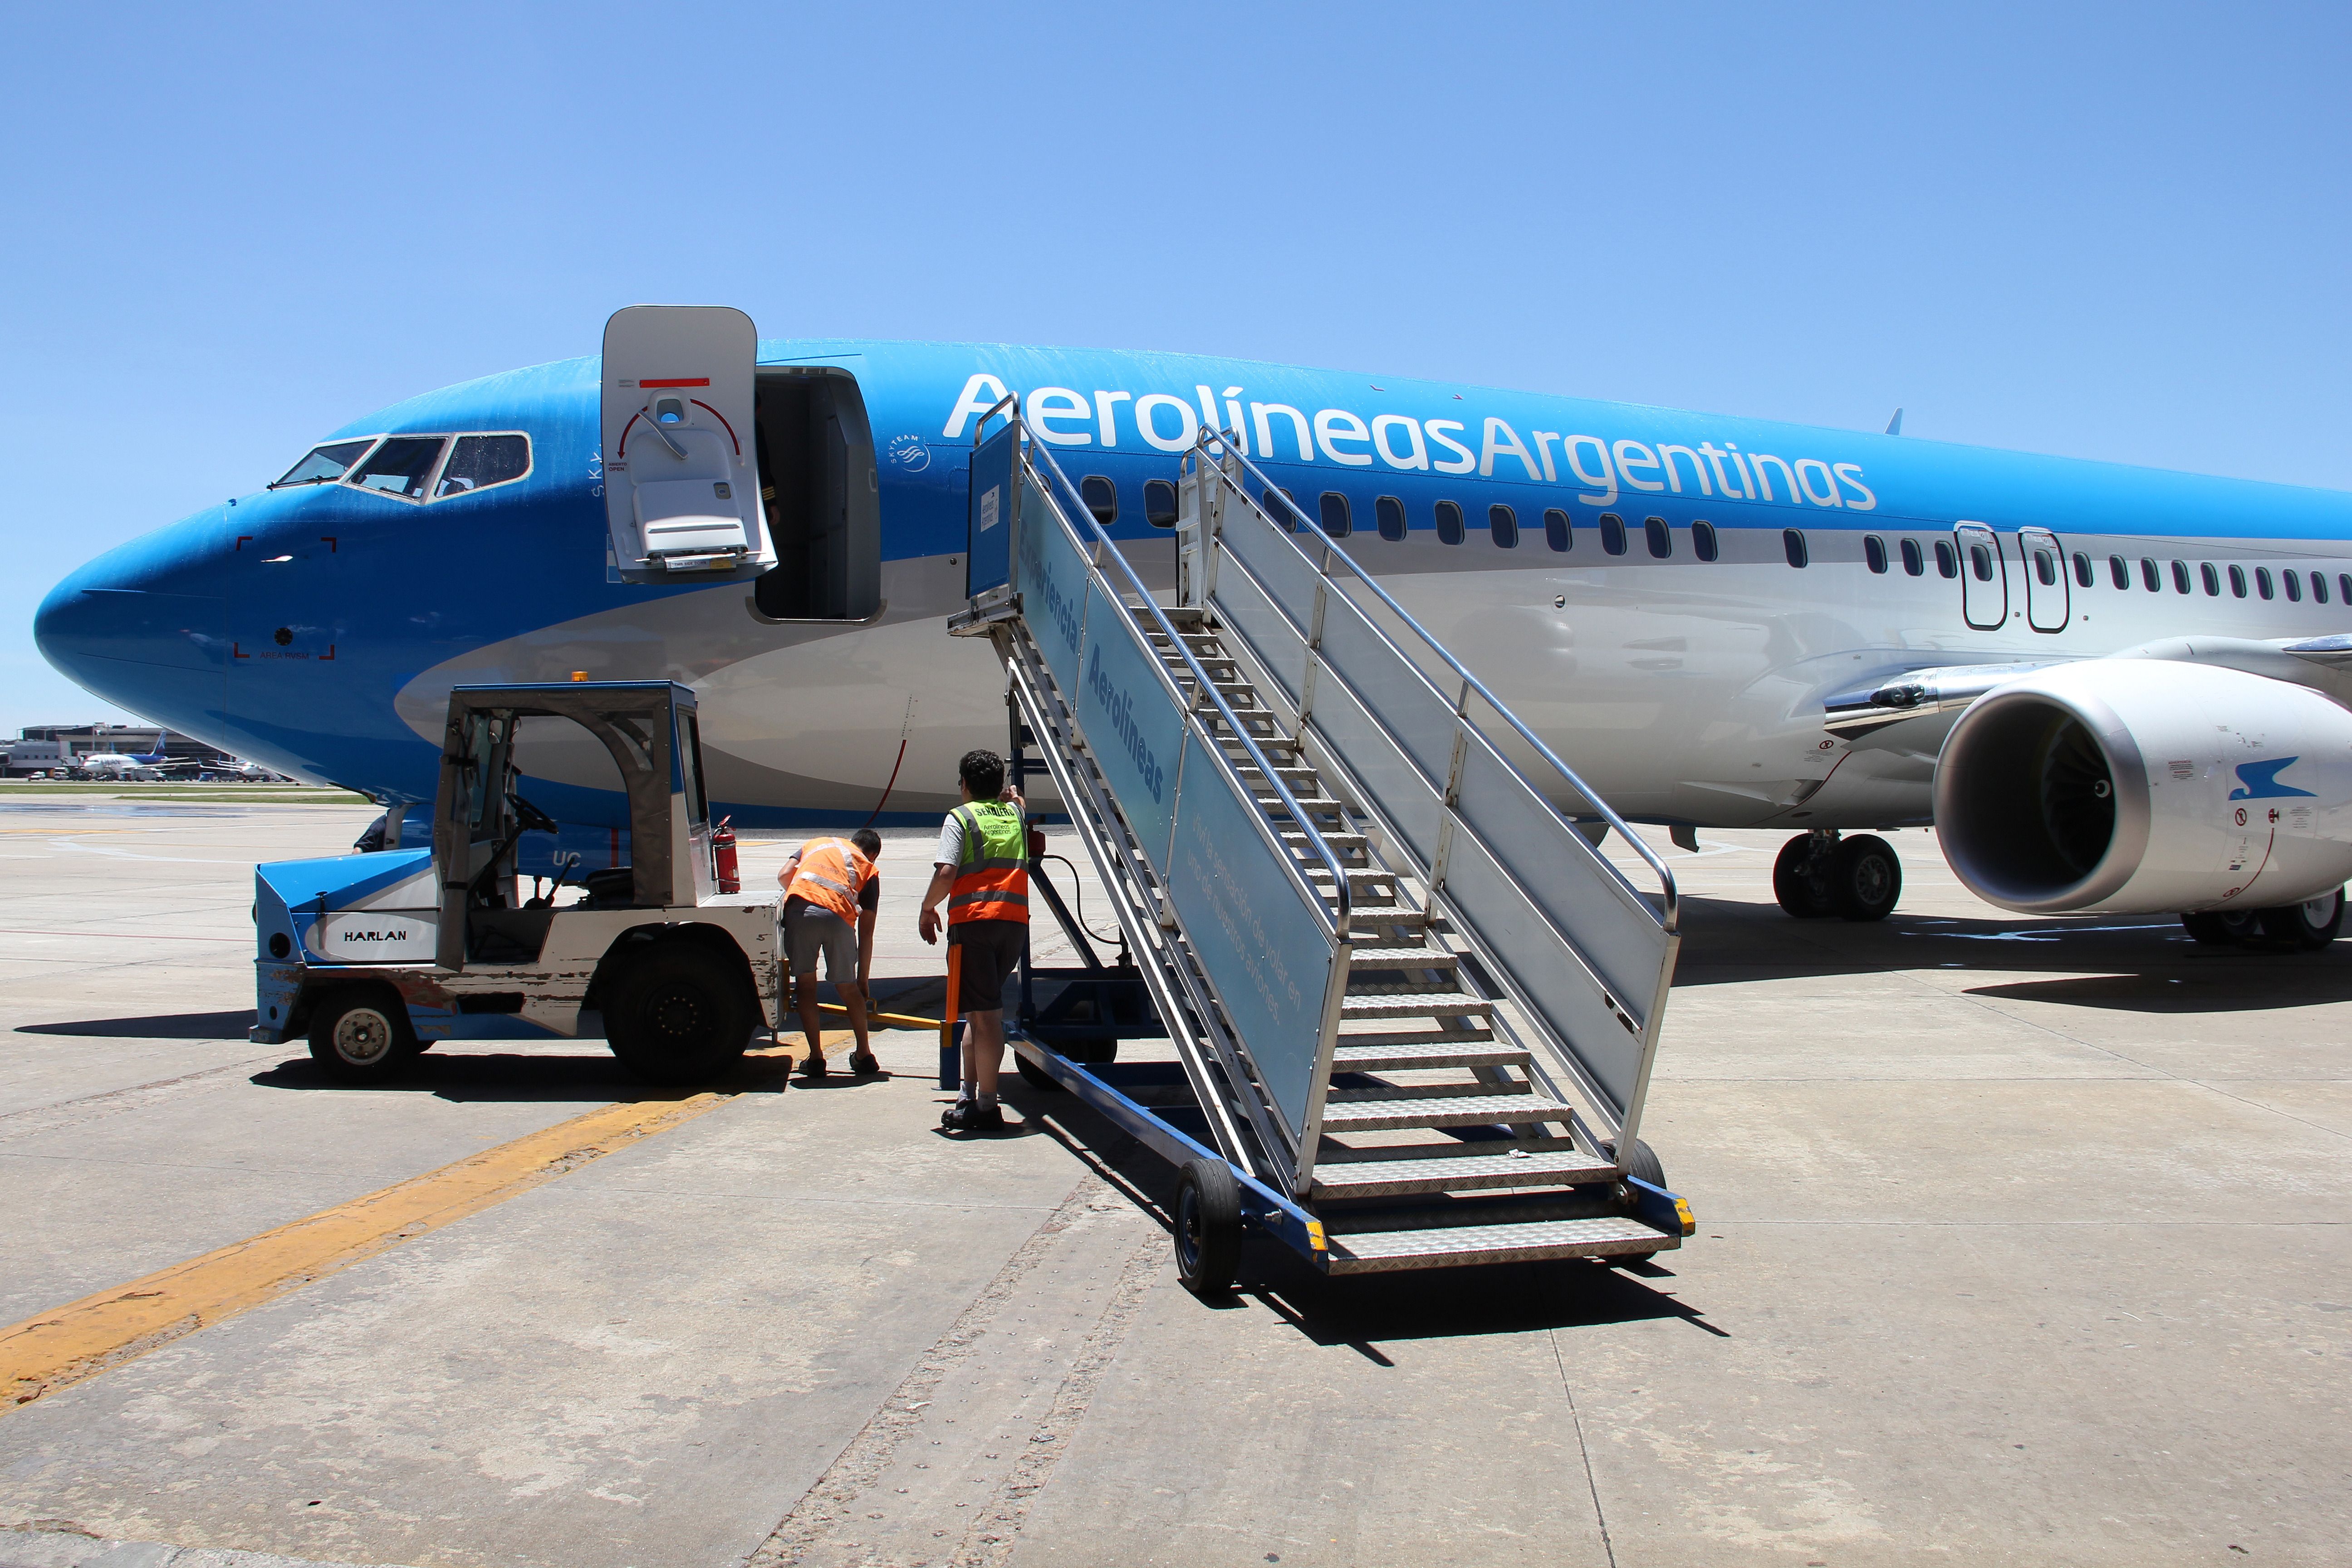 Air Argentina aircraft parked 